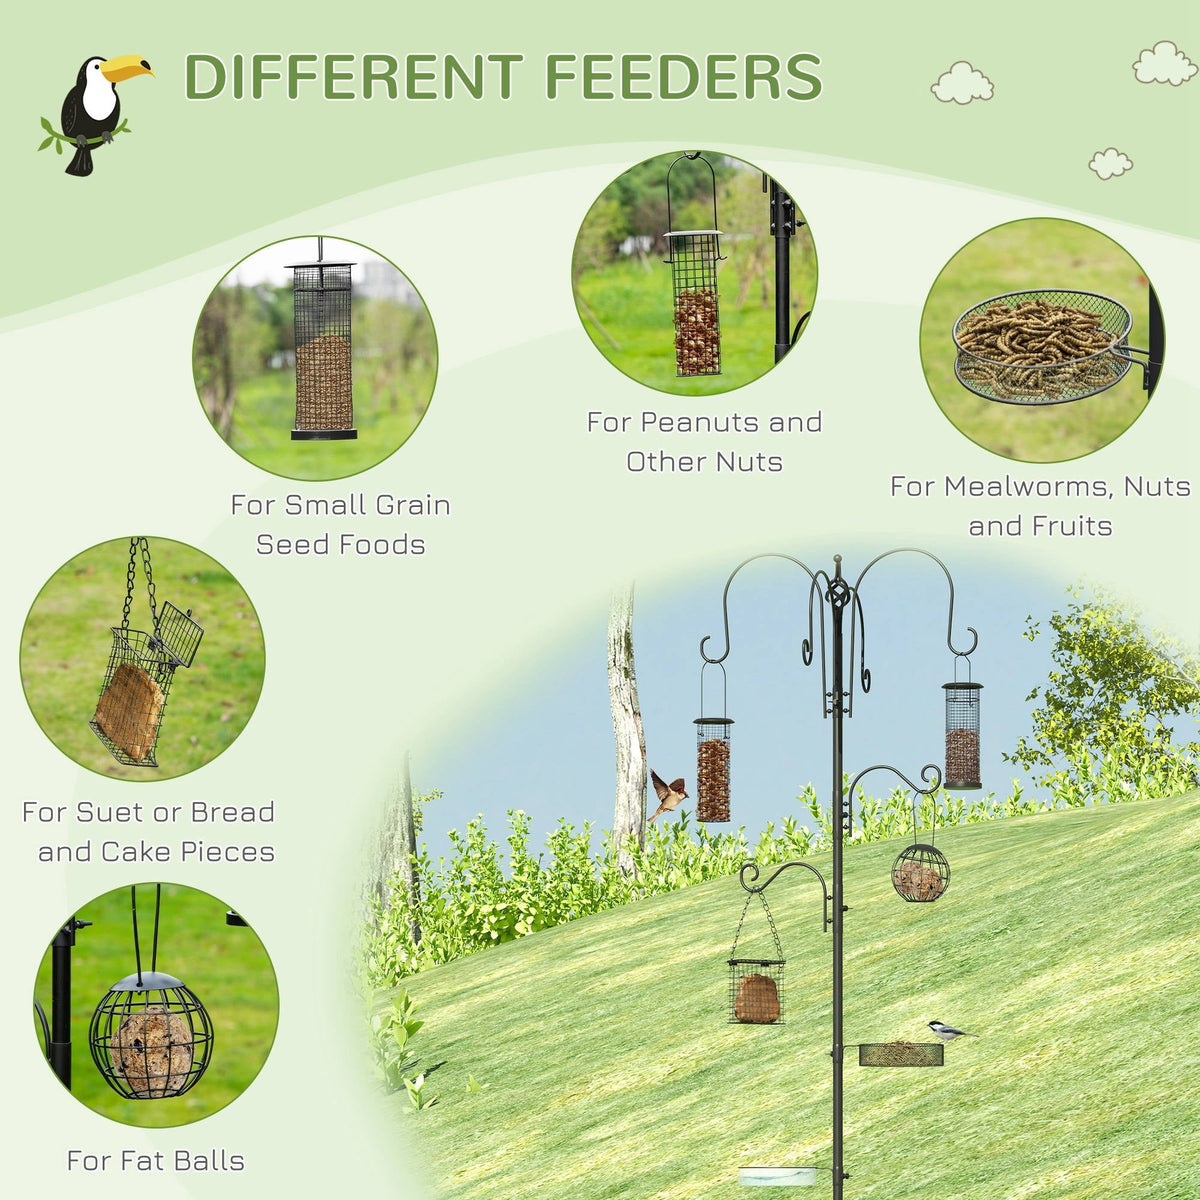 Multi-Hook Bird Feeding Station Kit with 4 Feeders, PawHut,